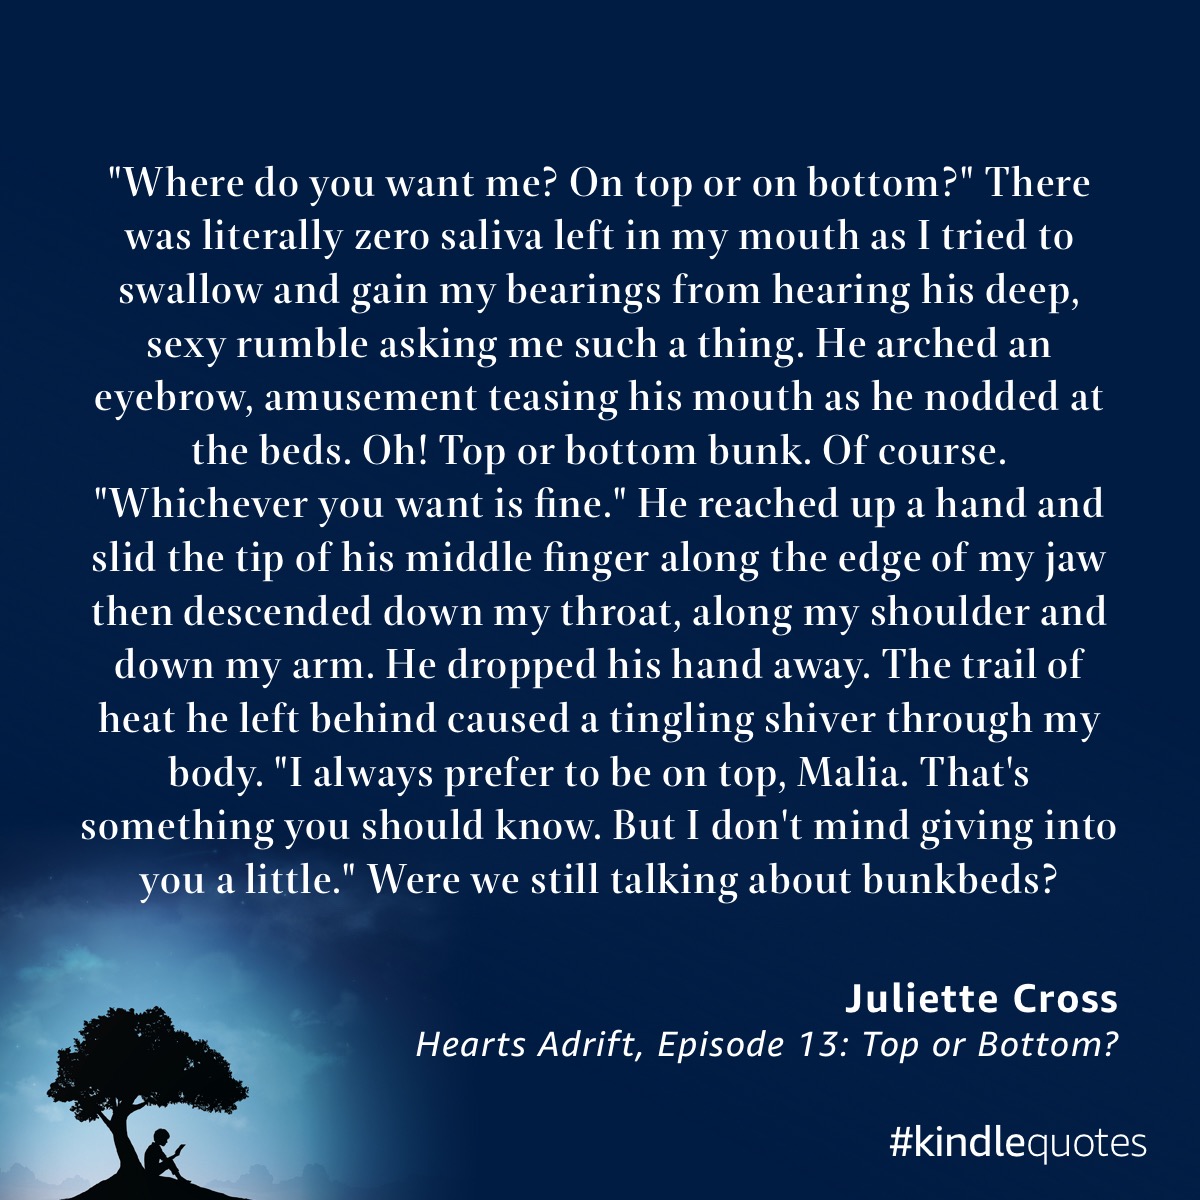 Book quote Juliette Cross